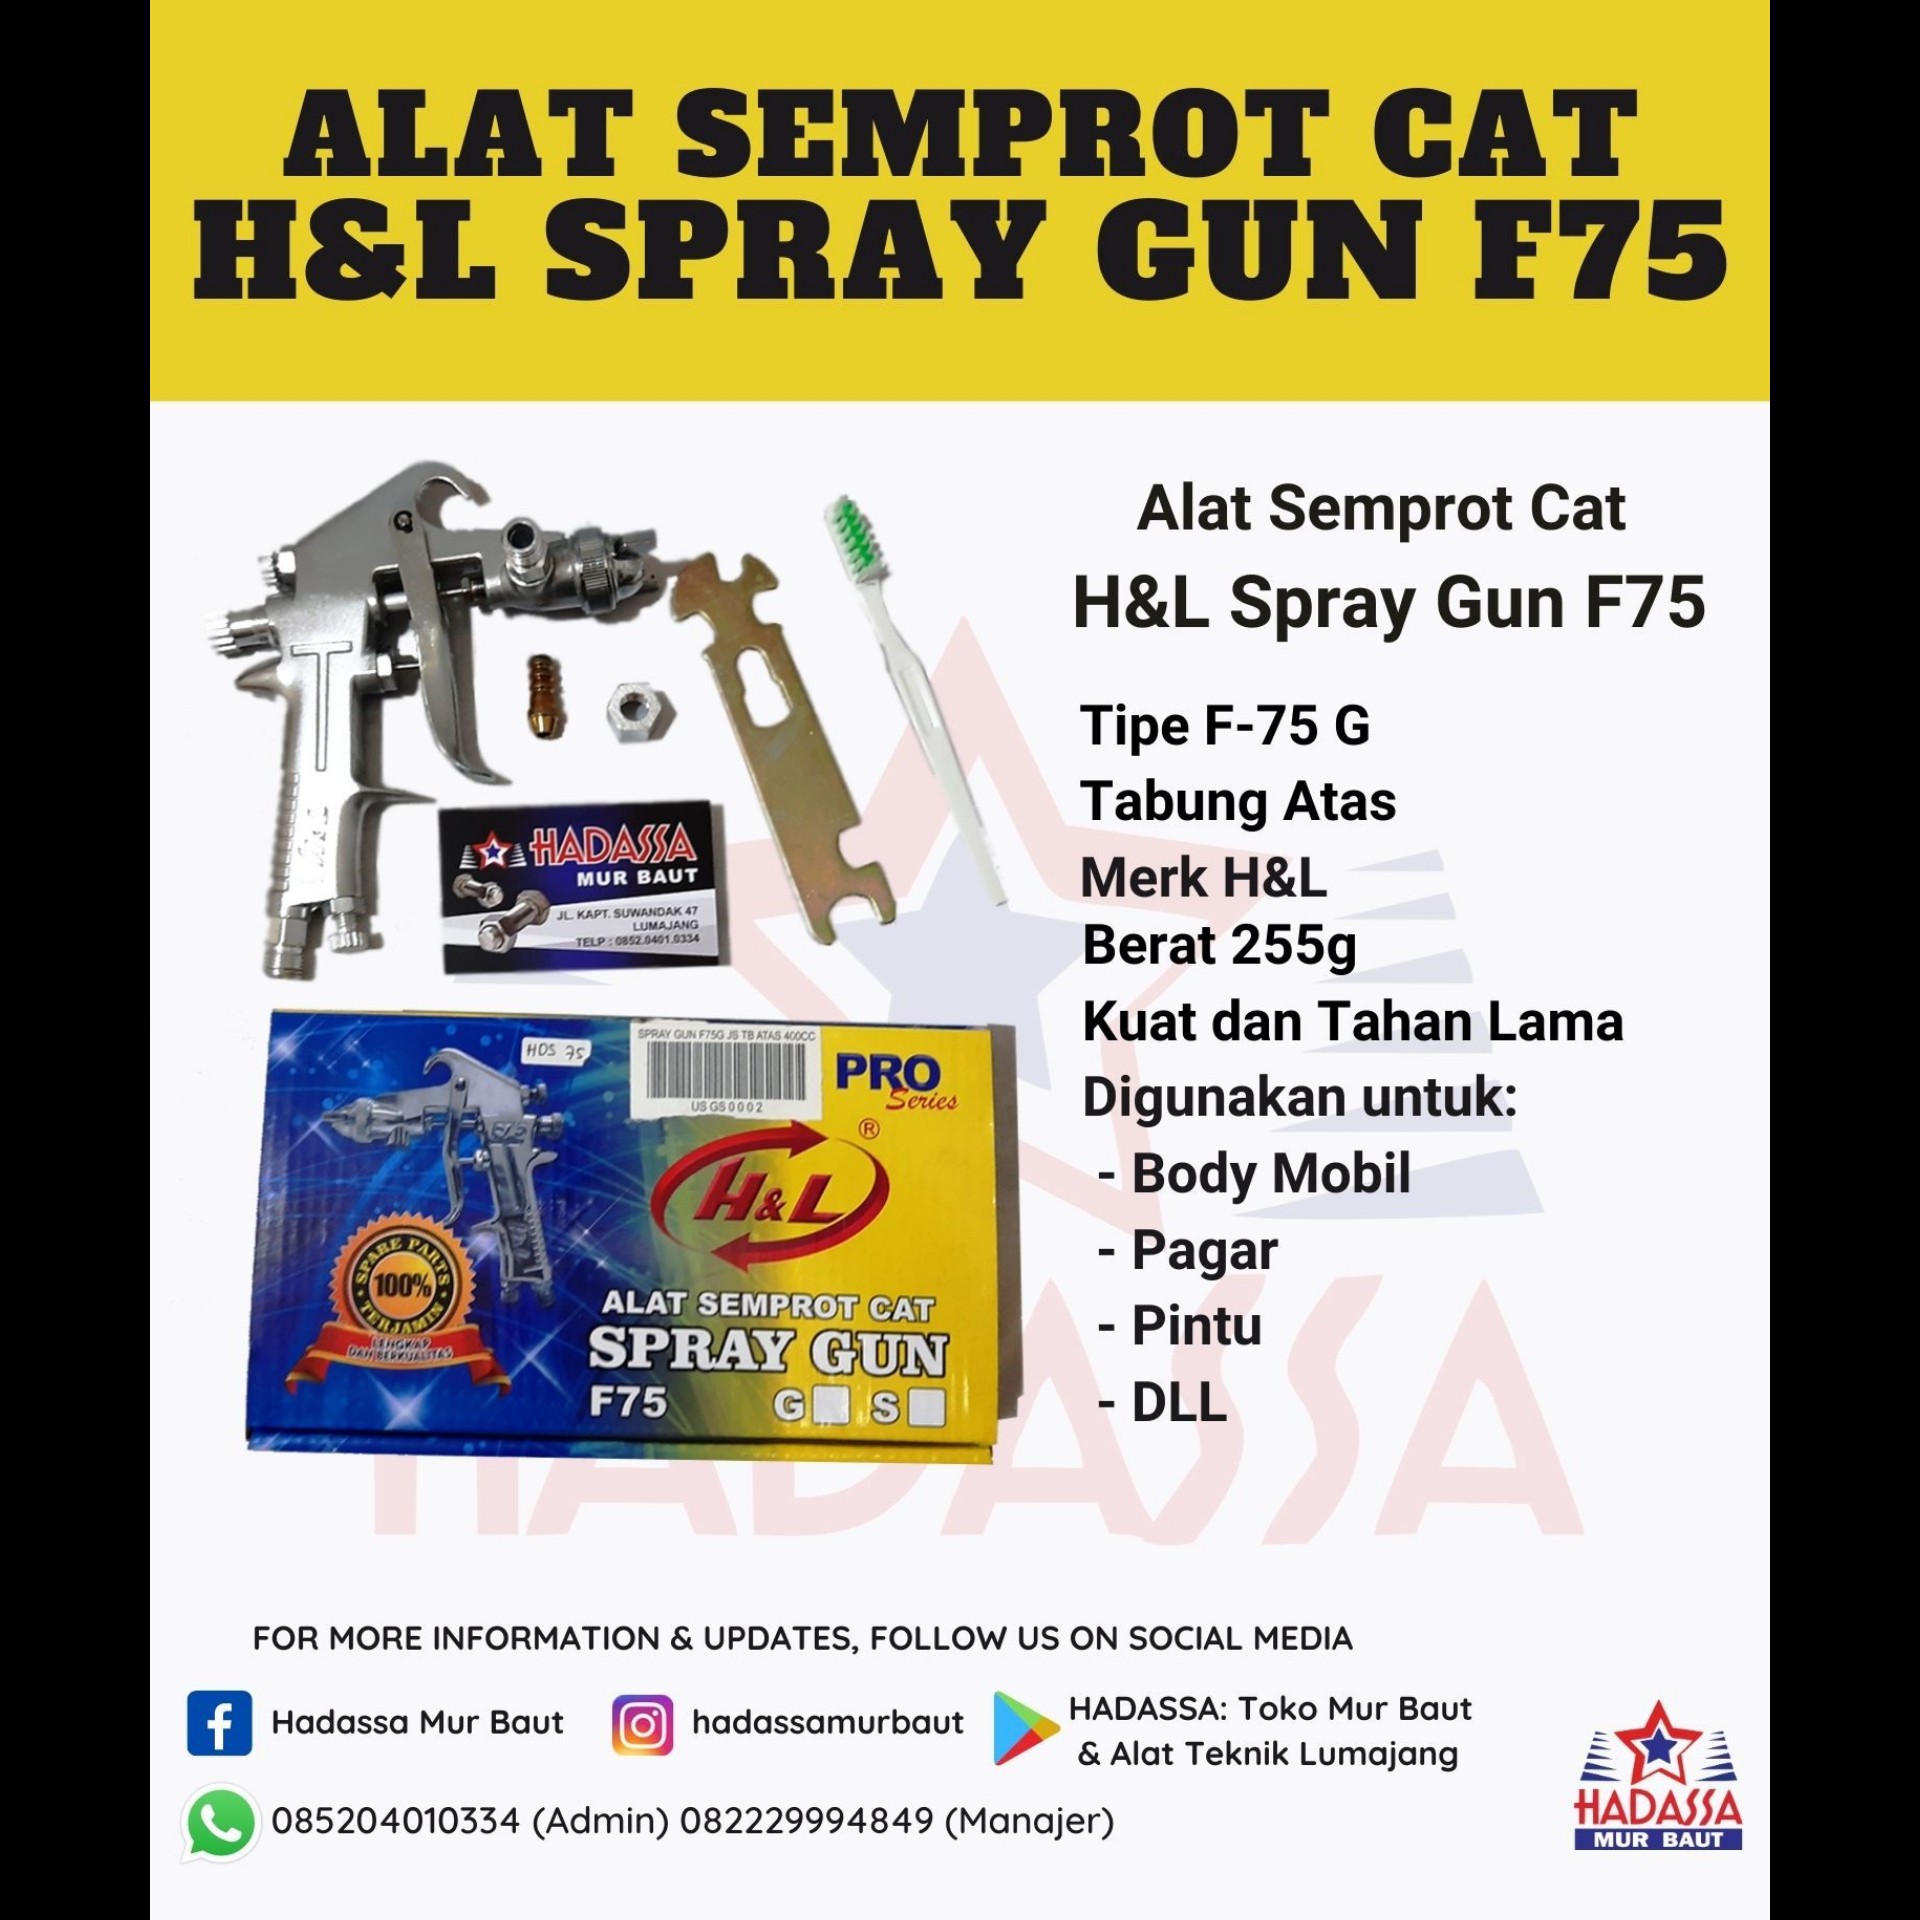 Alat Semprot Cat HL Spray Gun F75